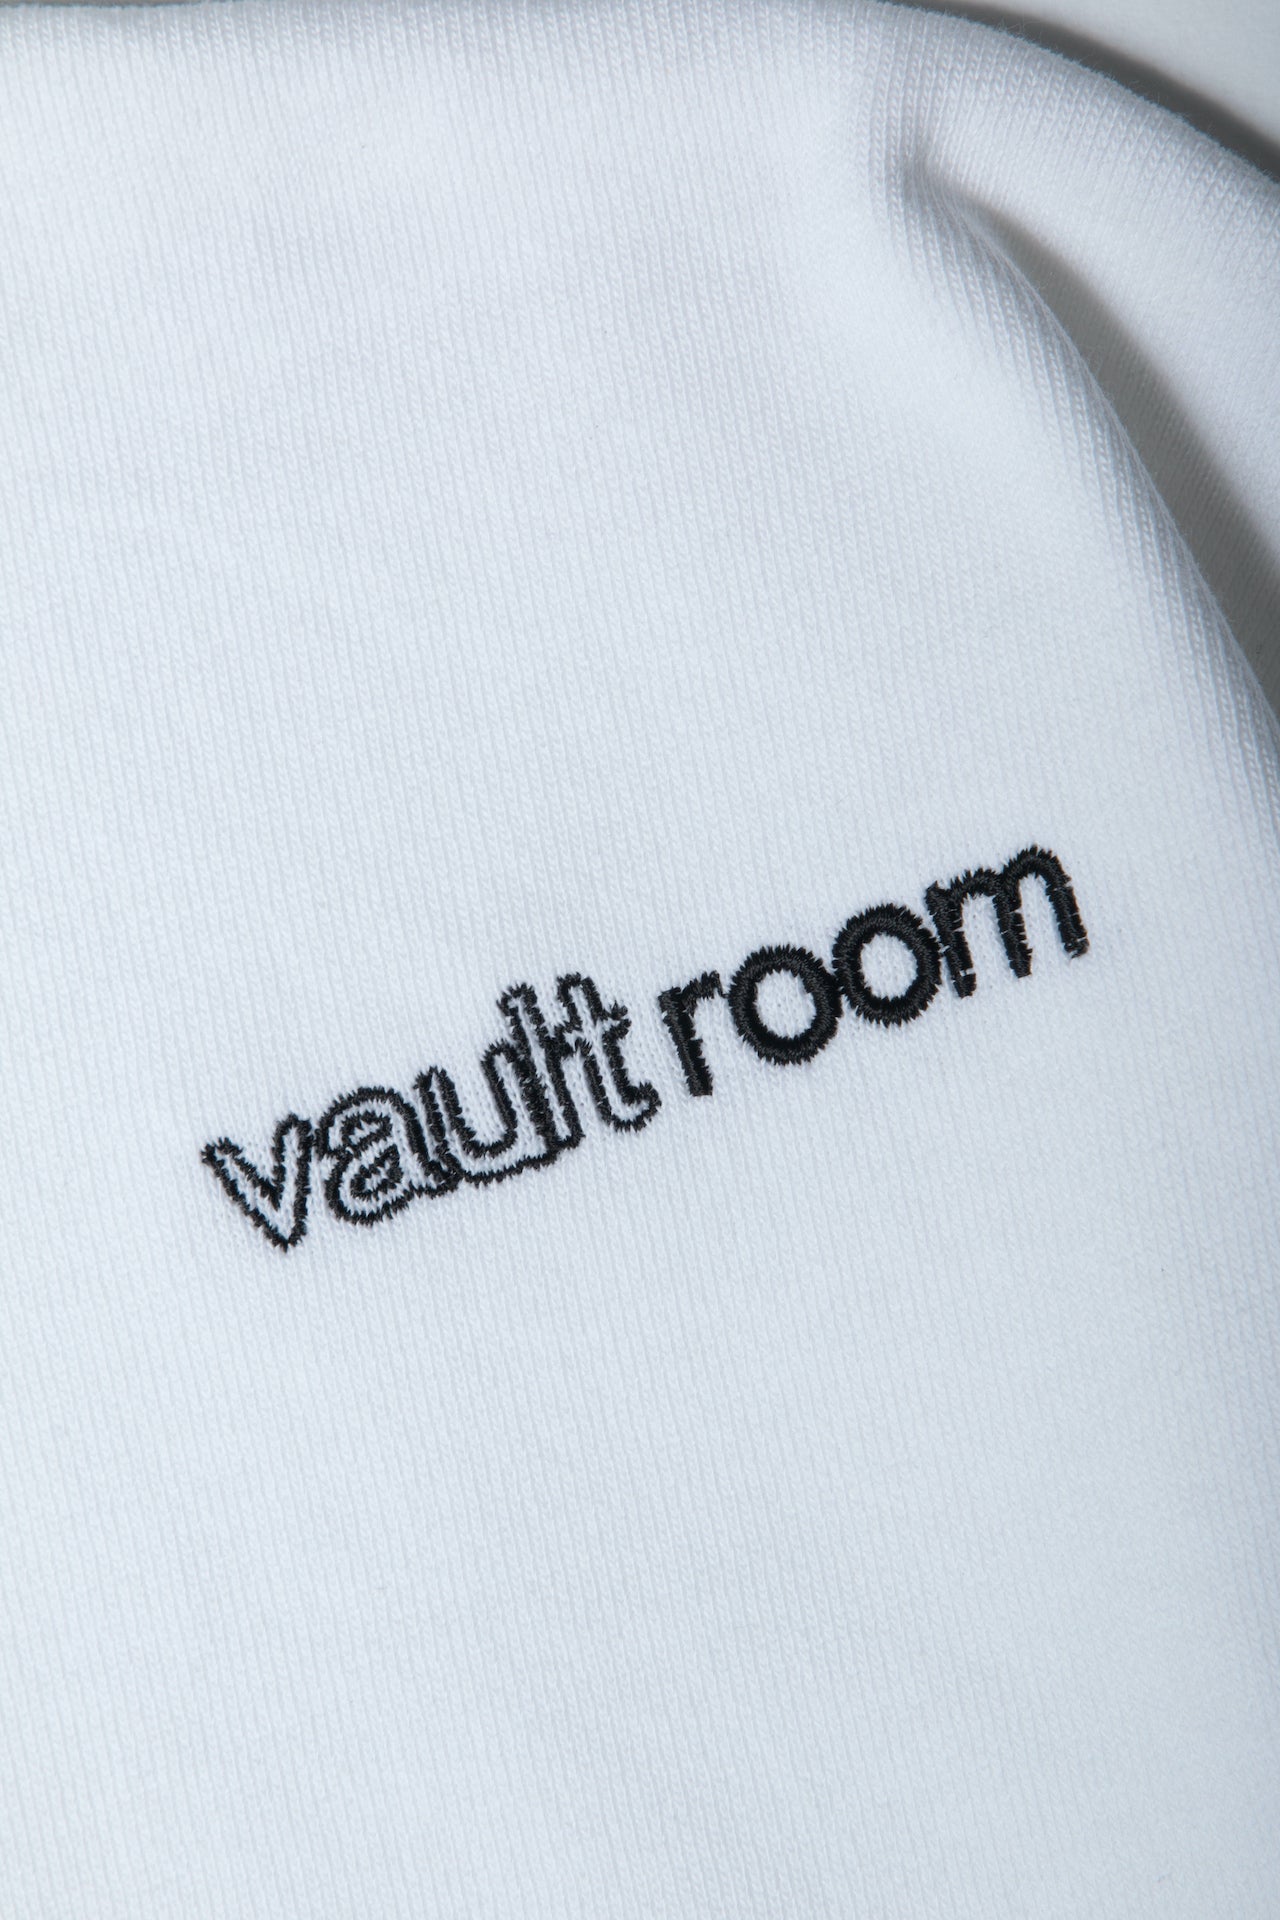 【Mサイズ】vaultroom × ZETA divisionTEE  Tシャツ